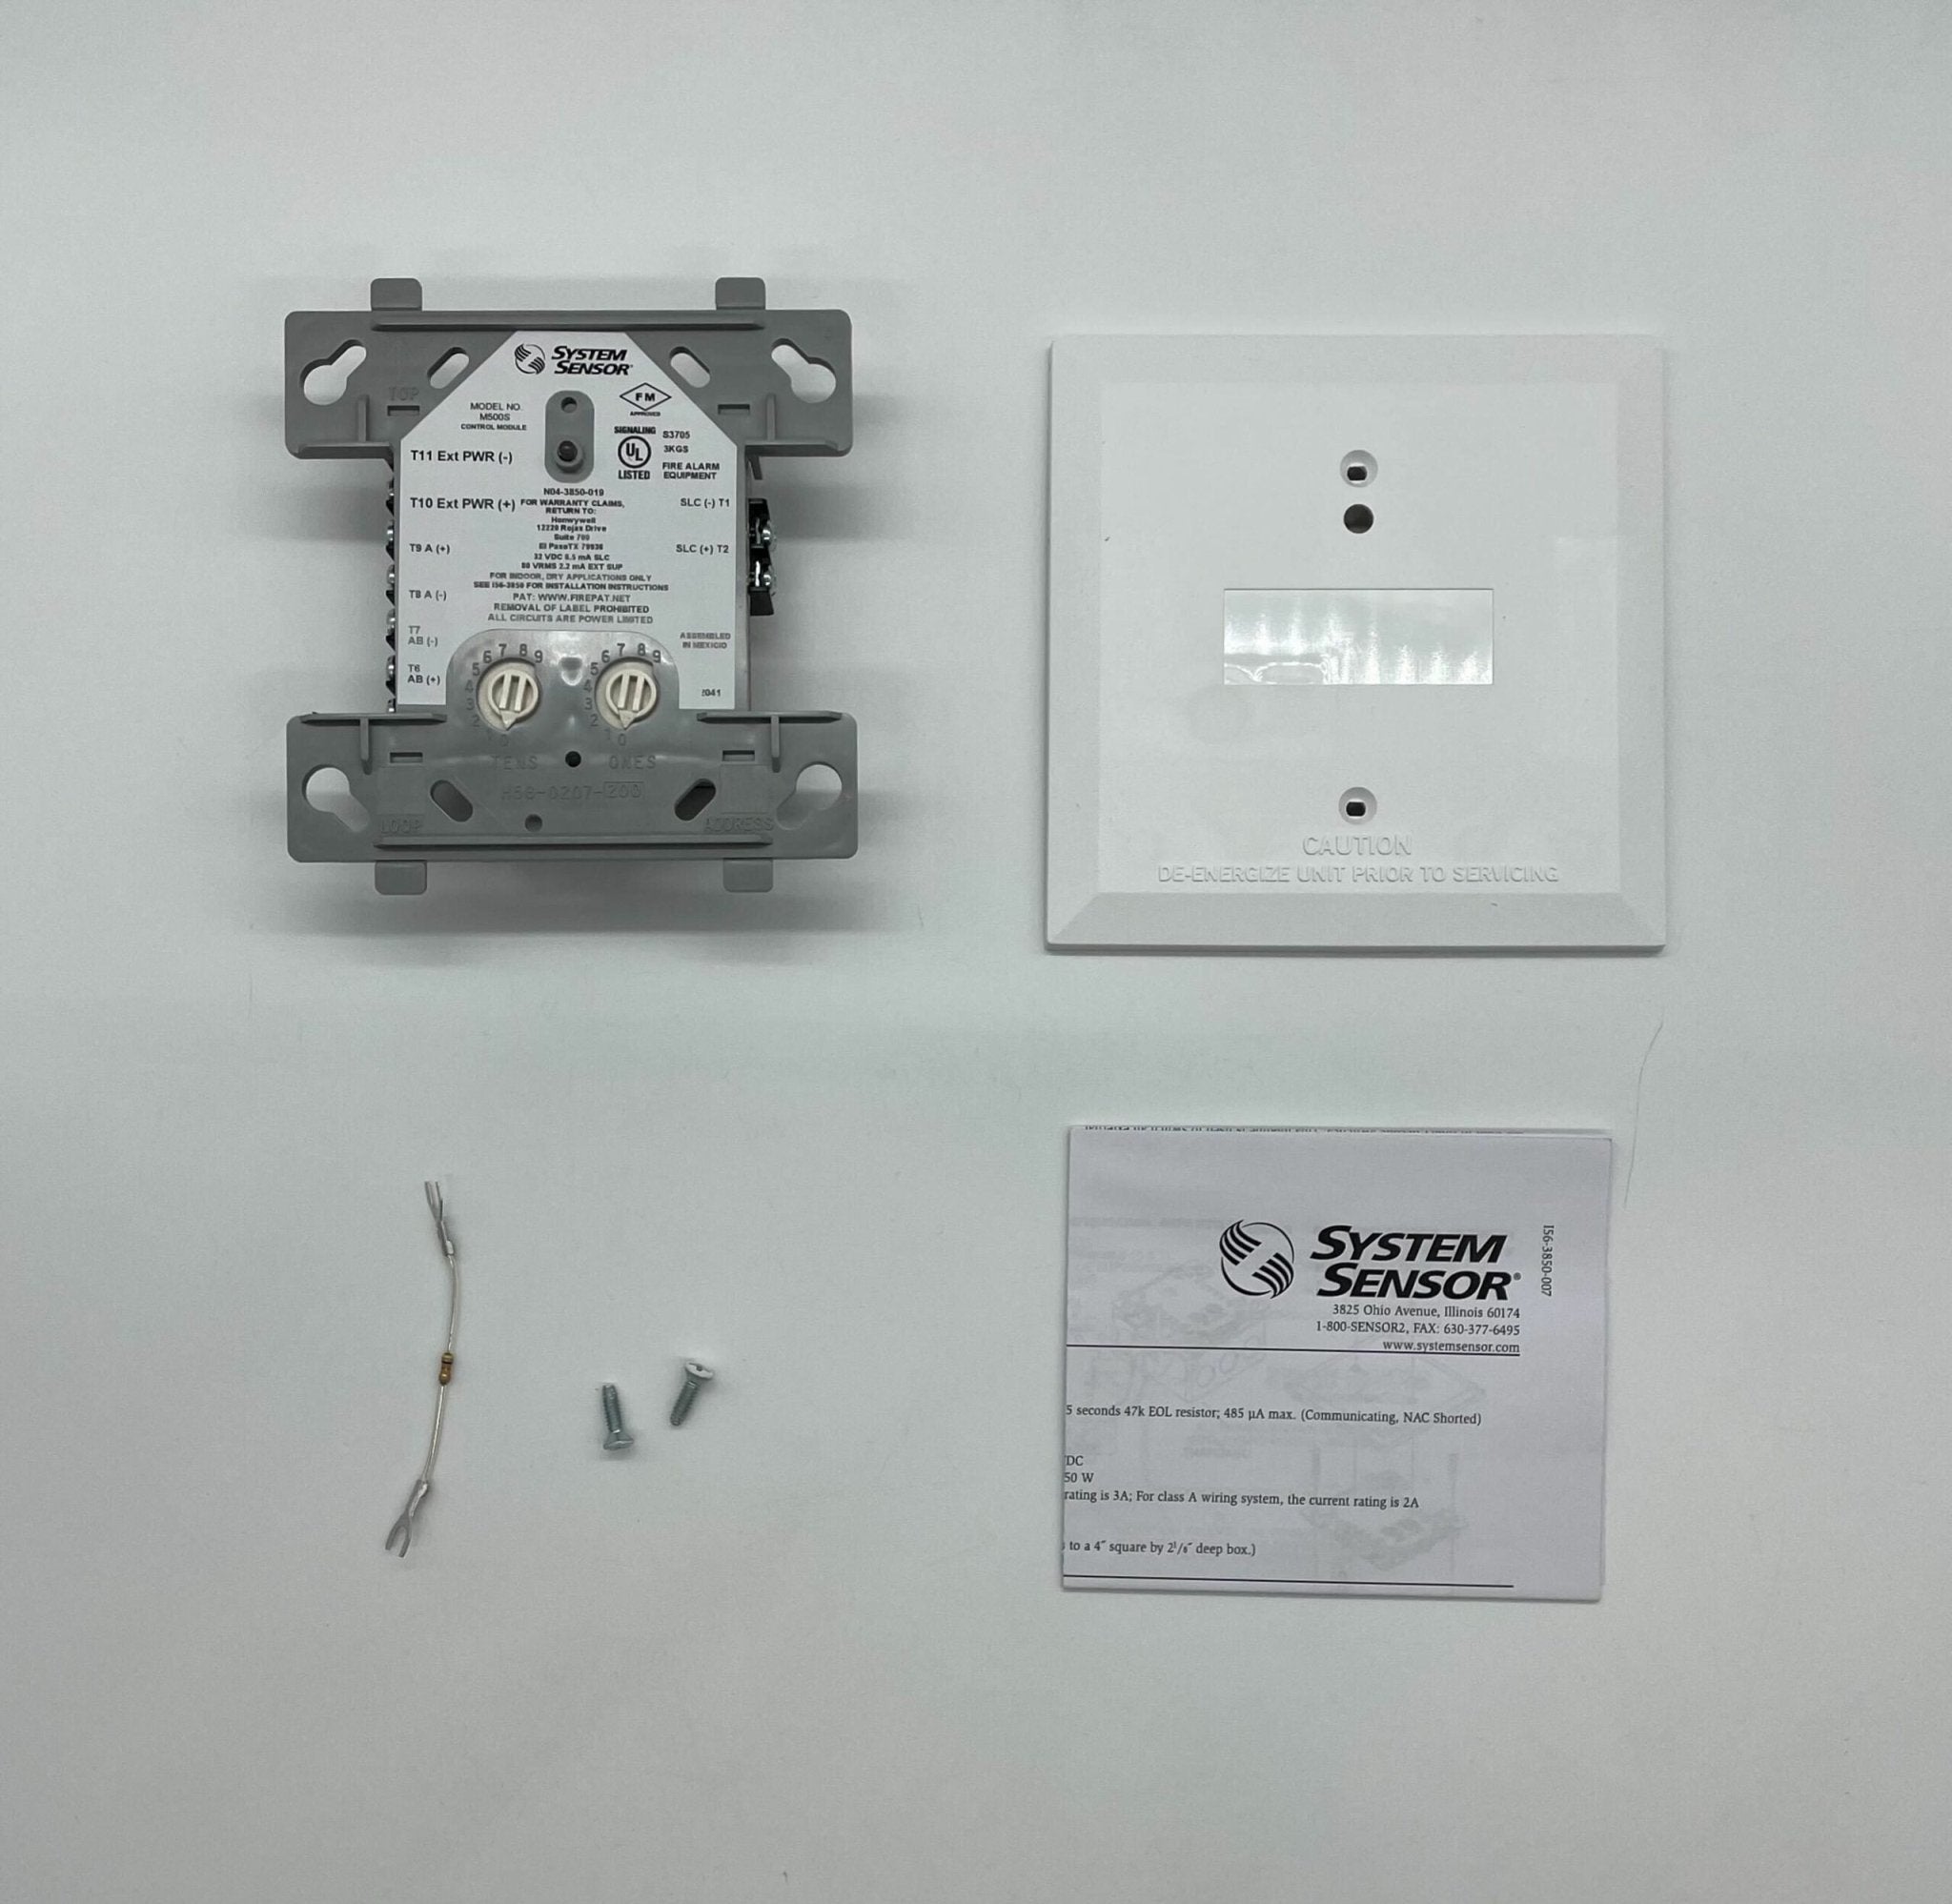 System Sensor M500S Supervised Control Module - The Fire Alarm Supplier